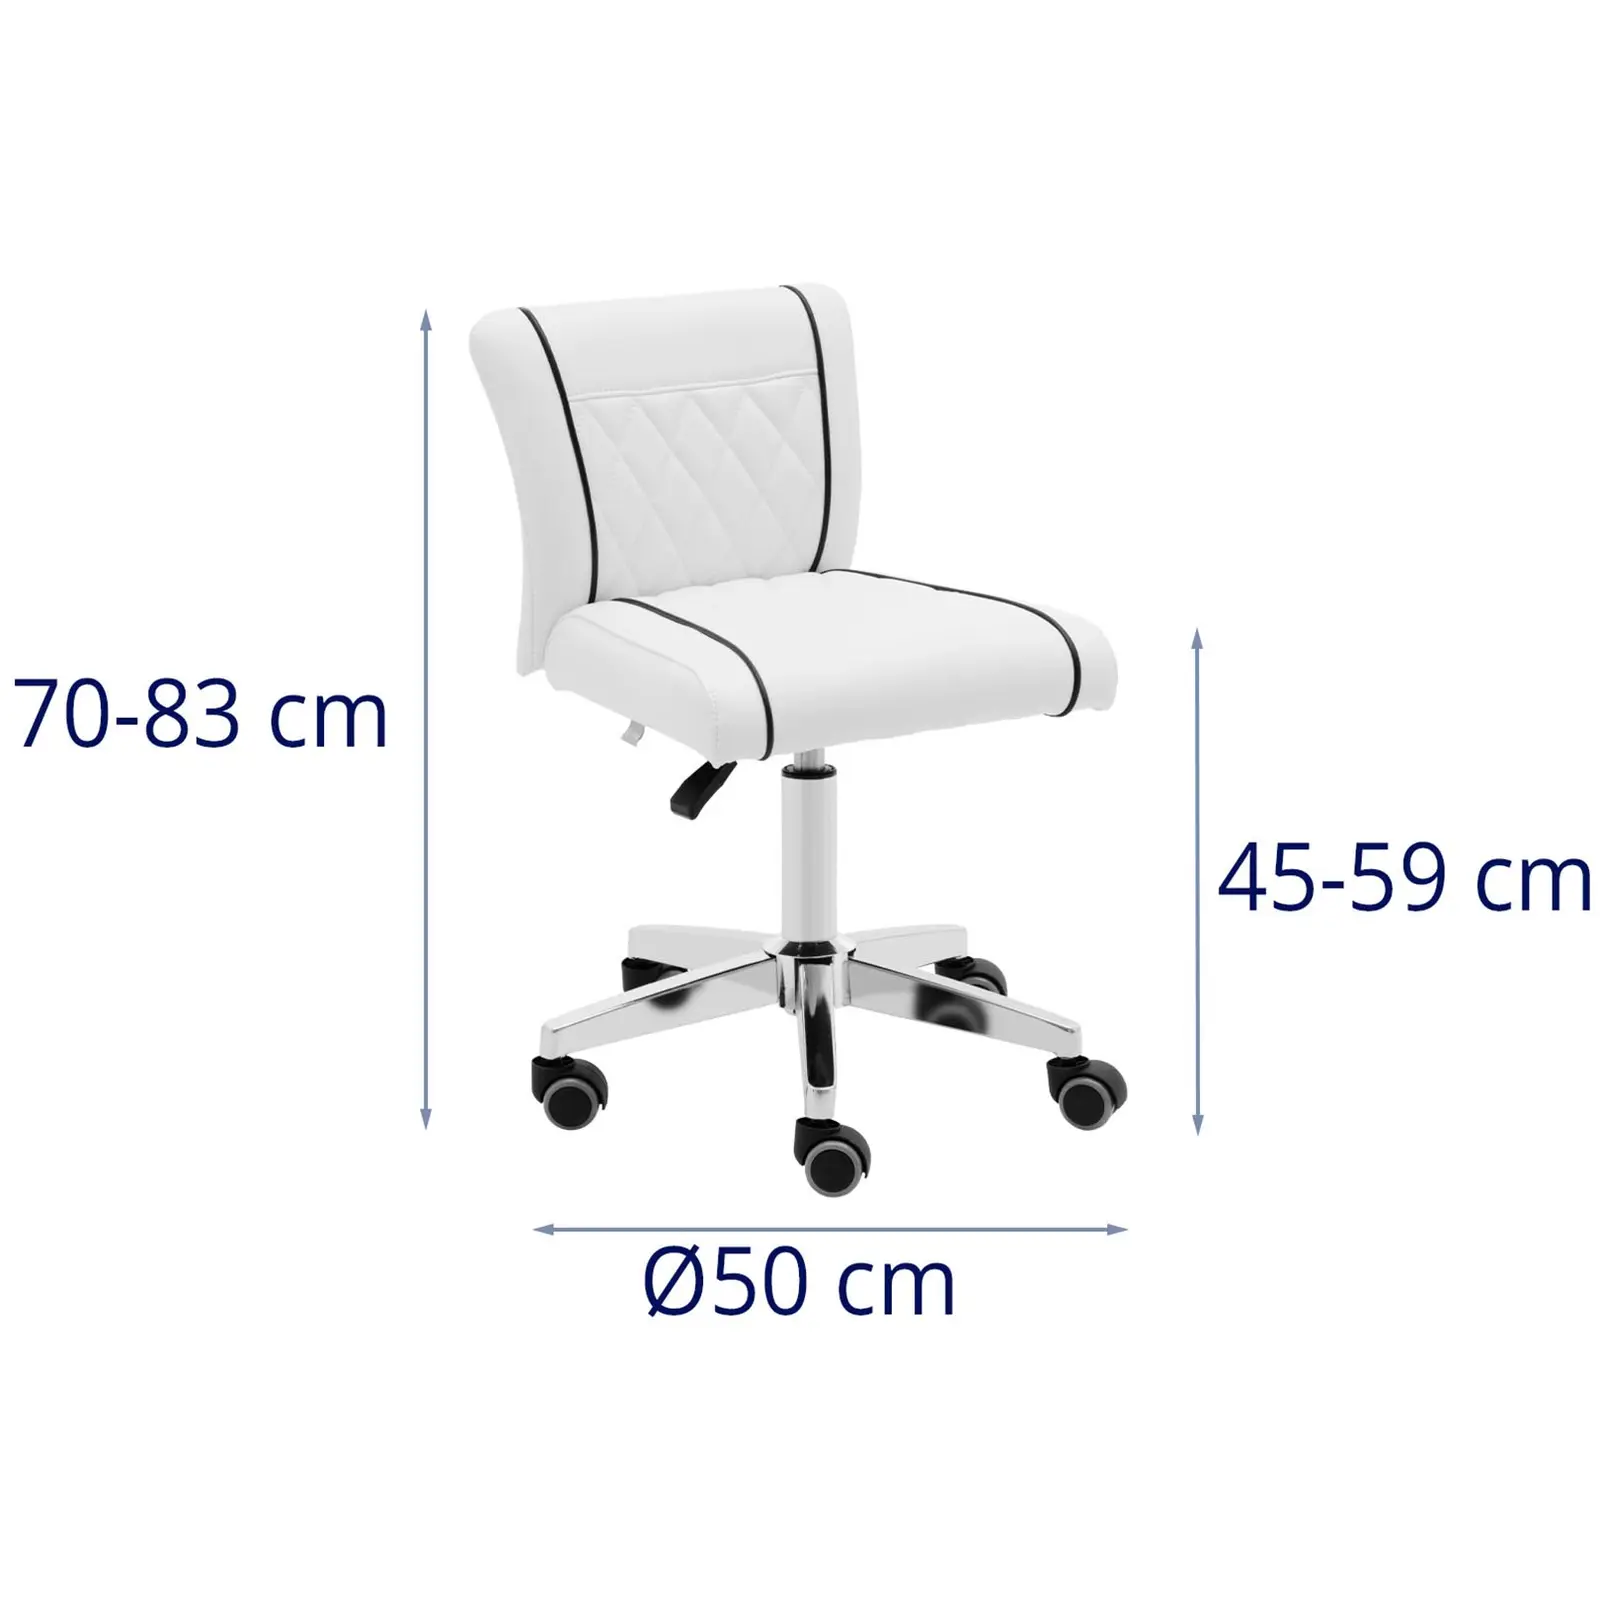 Arbetsstol med ryggstöd - 45 - 59 cm - 150 kg - Vit